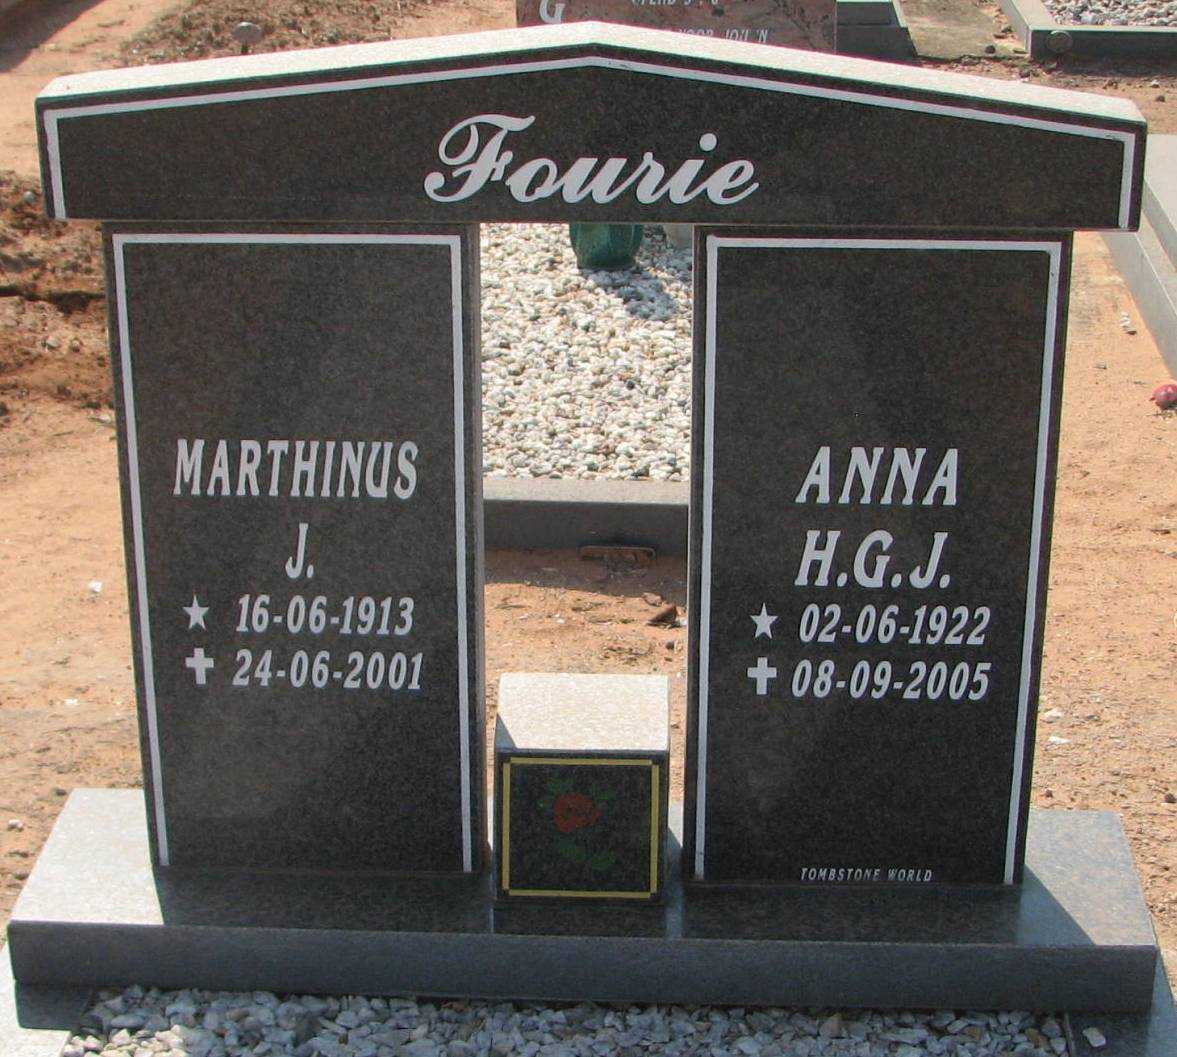 FOURIE Marthinus J. 1913-2001 & Anna H.G.J. 1922-2005